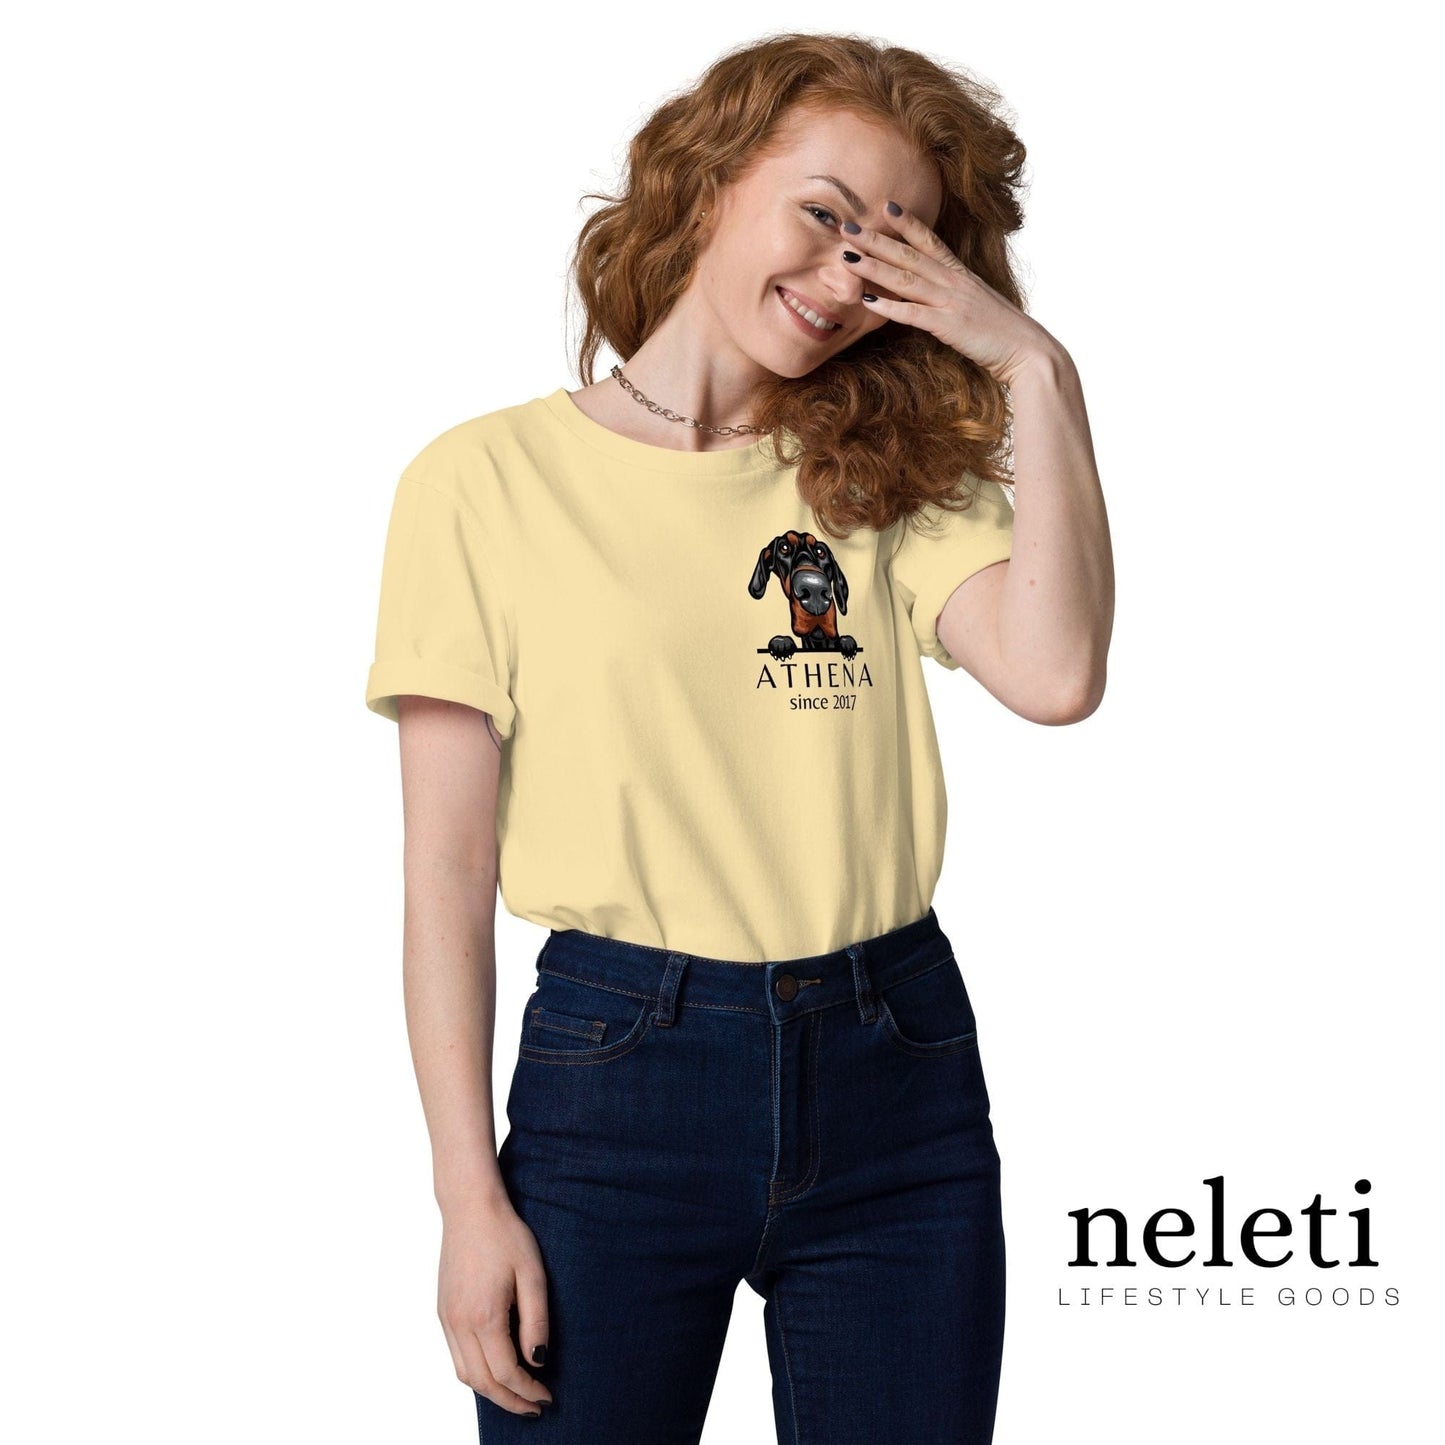 Custom Shirt for Dog Lovers - Personalized Dog Breed at Neleti.com